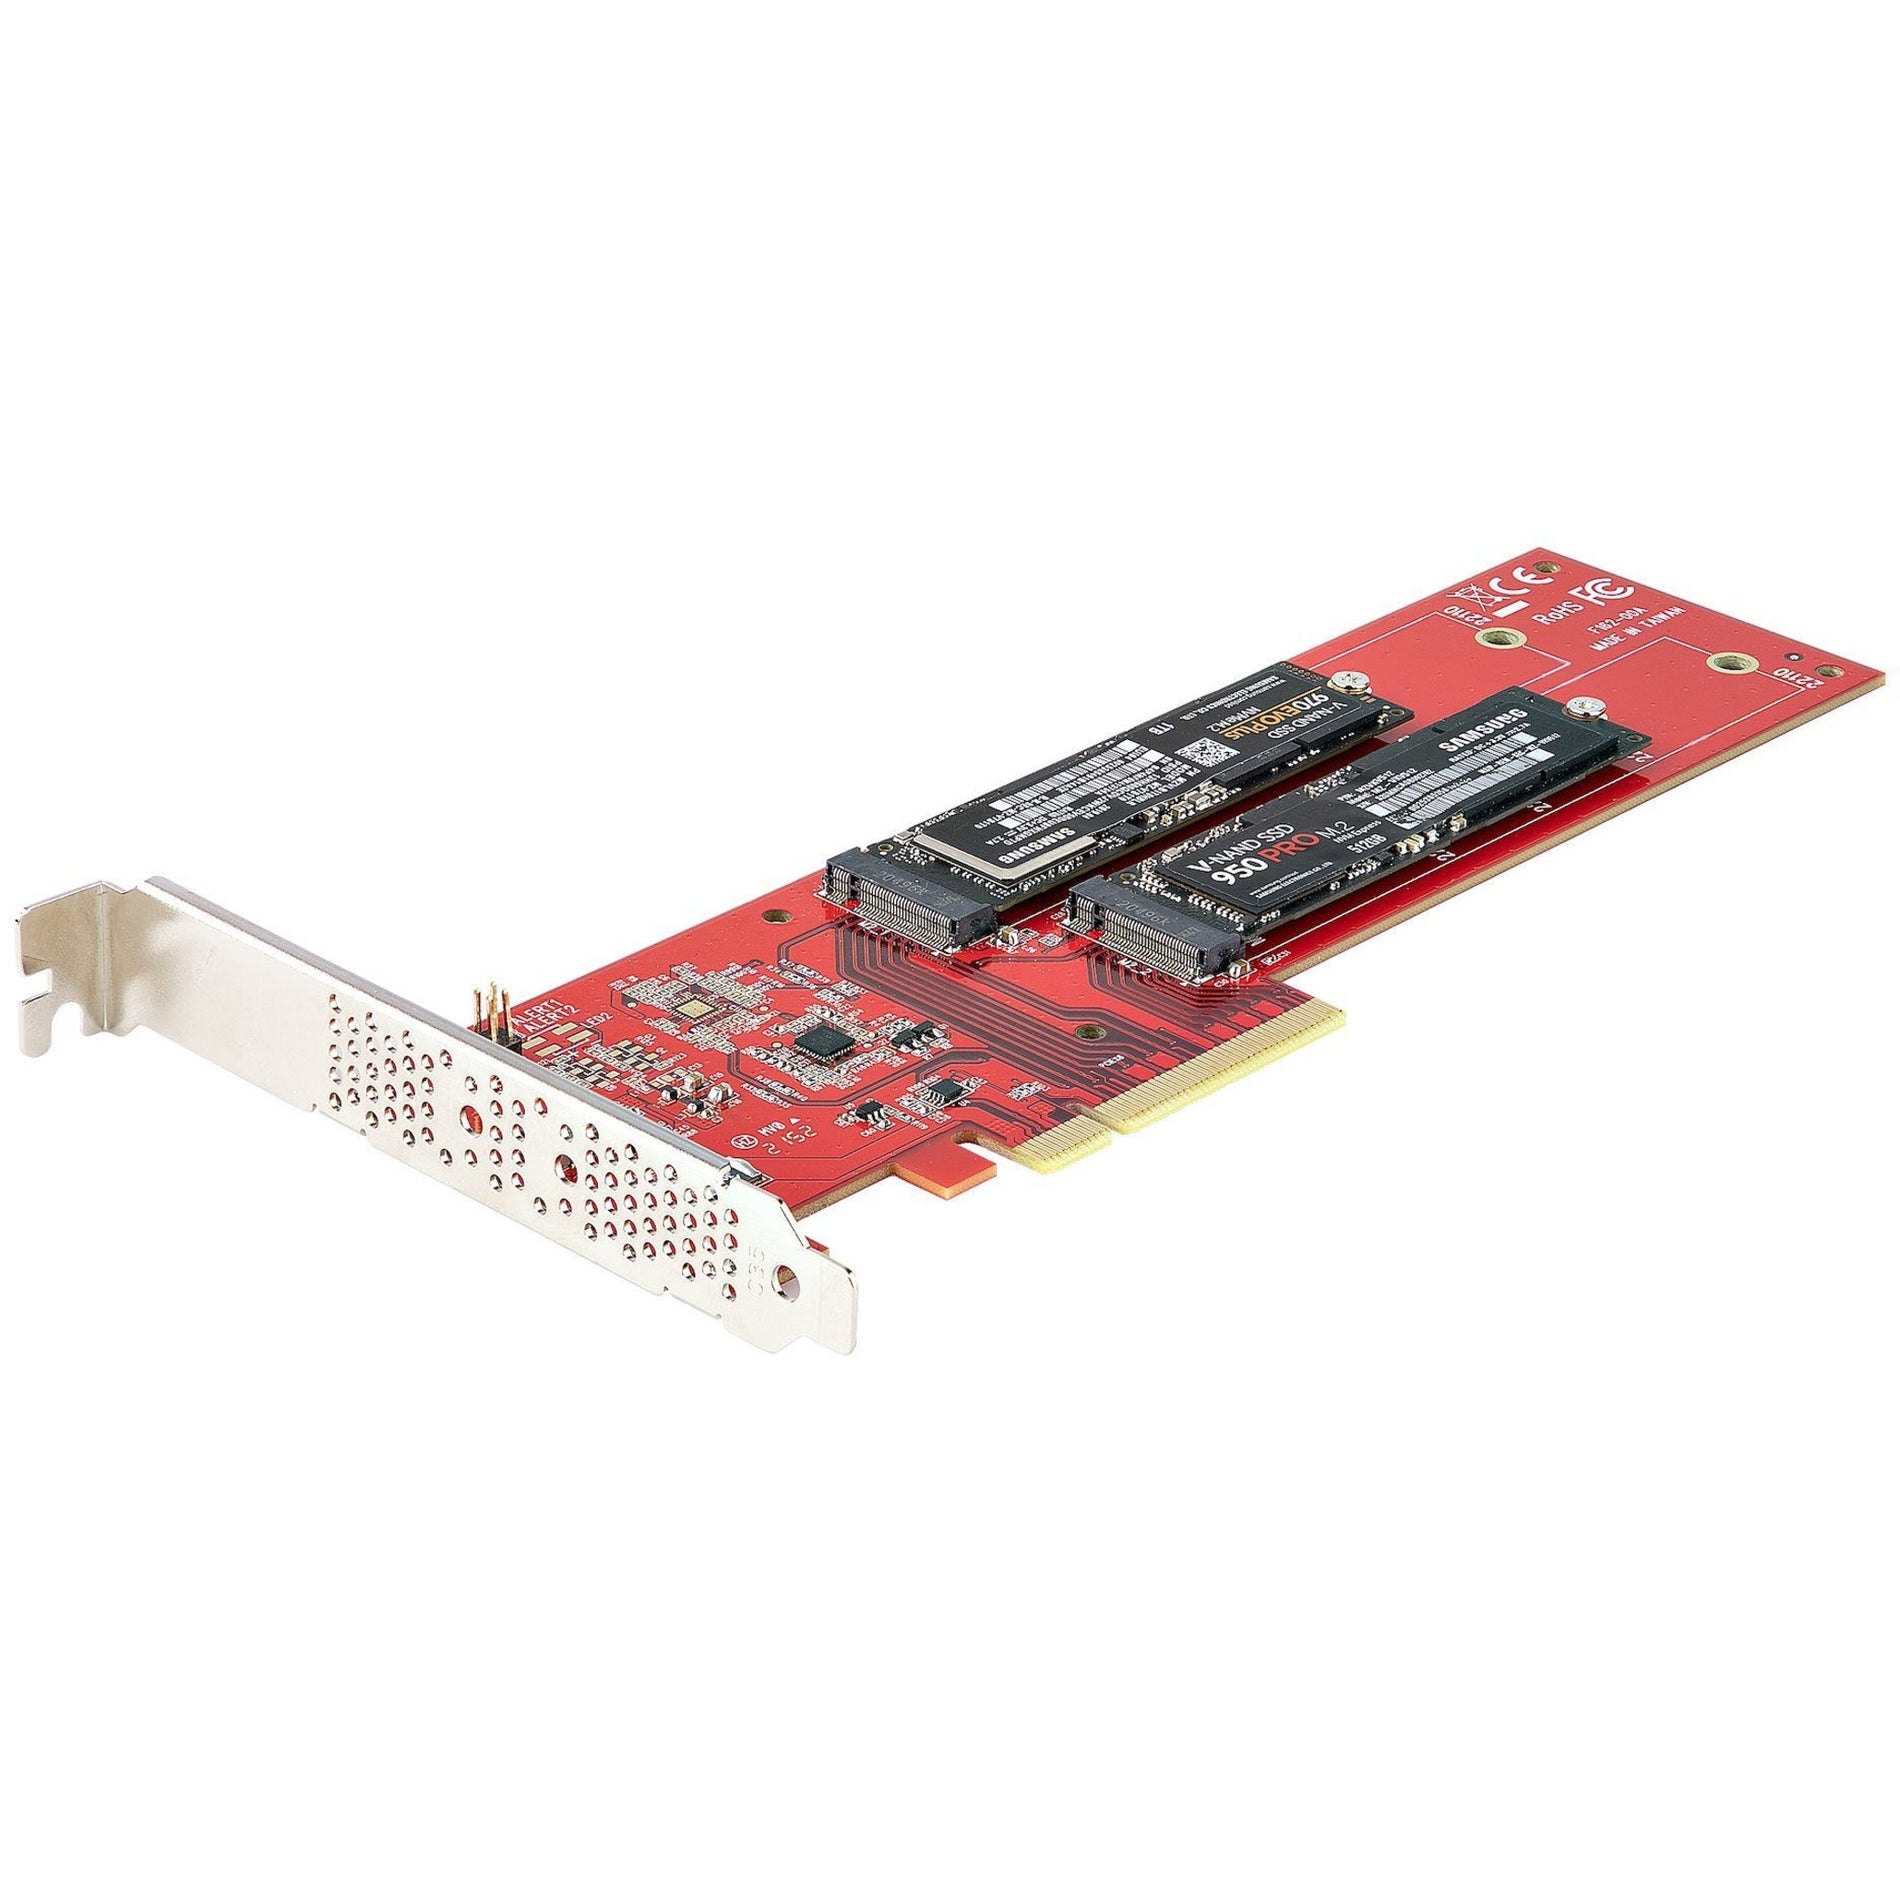 StarTech.com 启达科技  PCIe PCIe  M.2 M.2  Adapter Card 适配卡  Dual 双  NVMe NVMe  AHCI AHCI  SSD 固态硬盘  PCI Express PCI Express  Bifurcation 分流